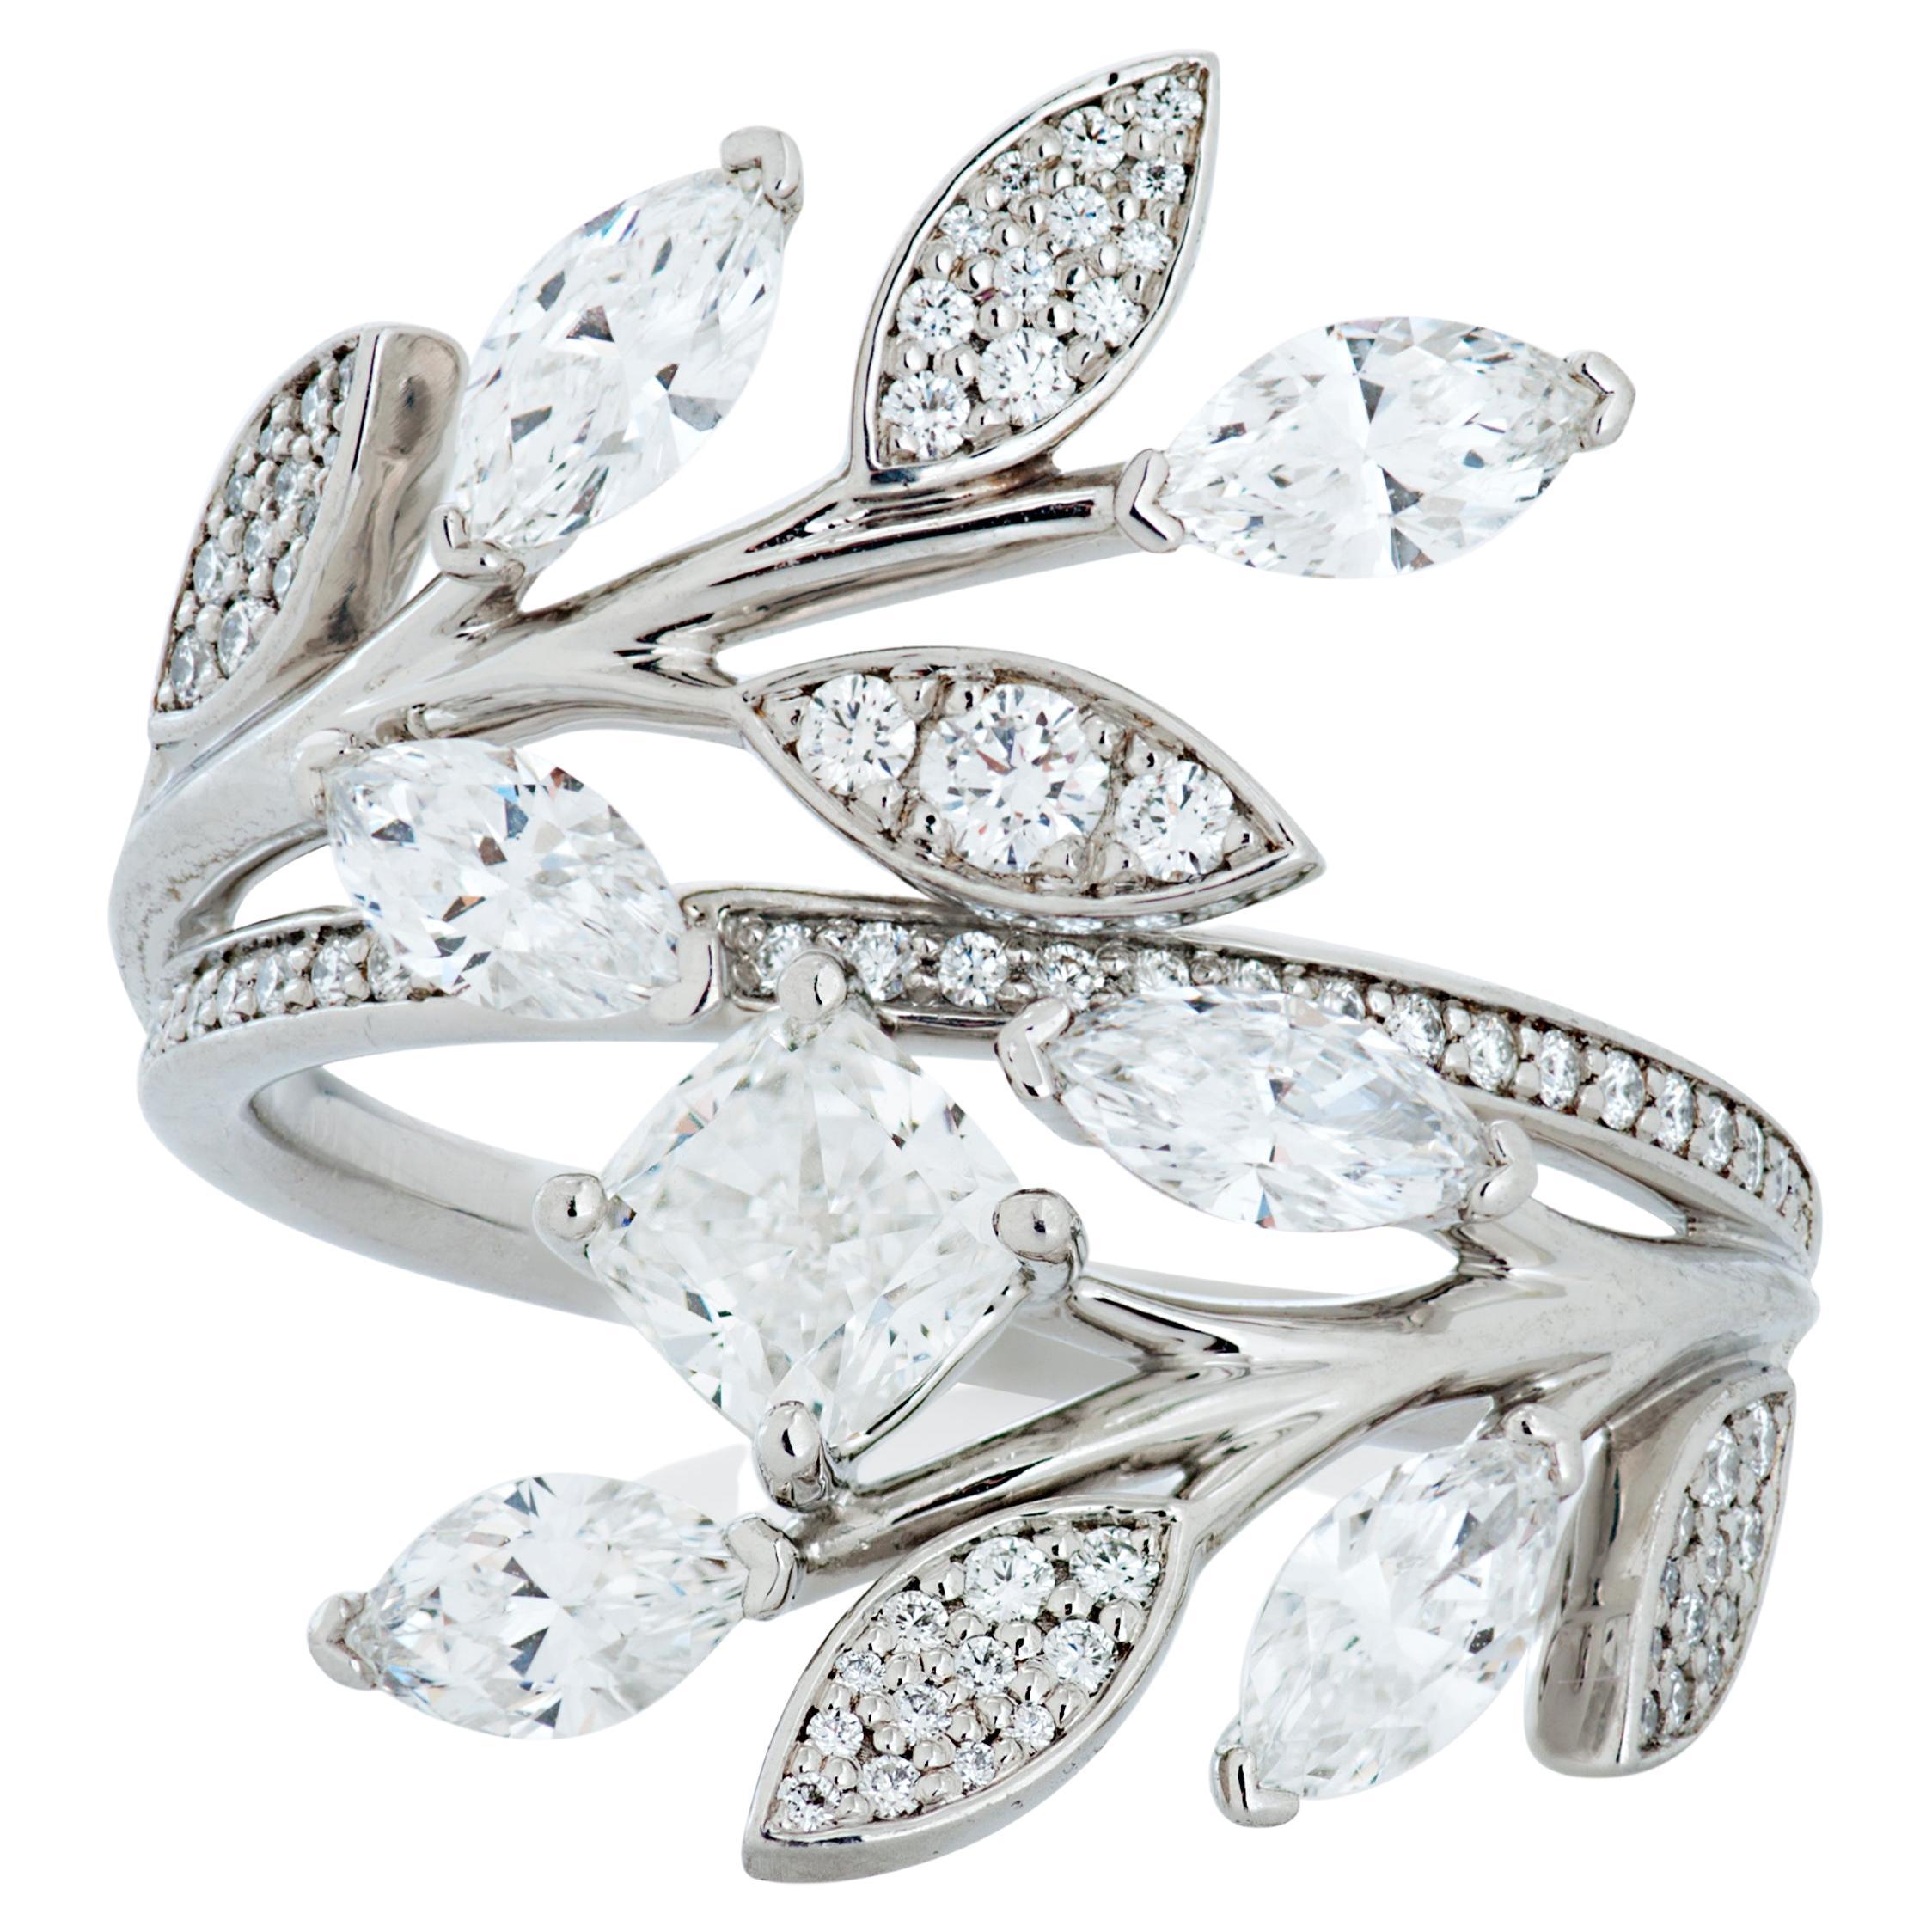 Tiffany & Co. Victoria Vine 0.54 Carat Cushion Diamond Bypass Ring in Platinum